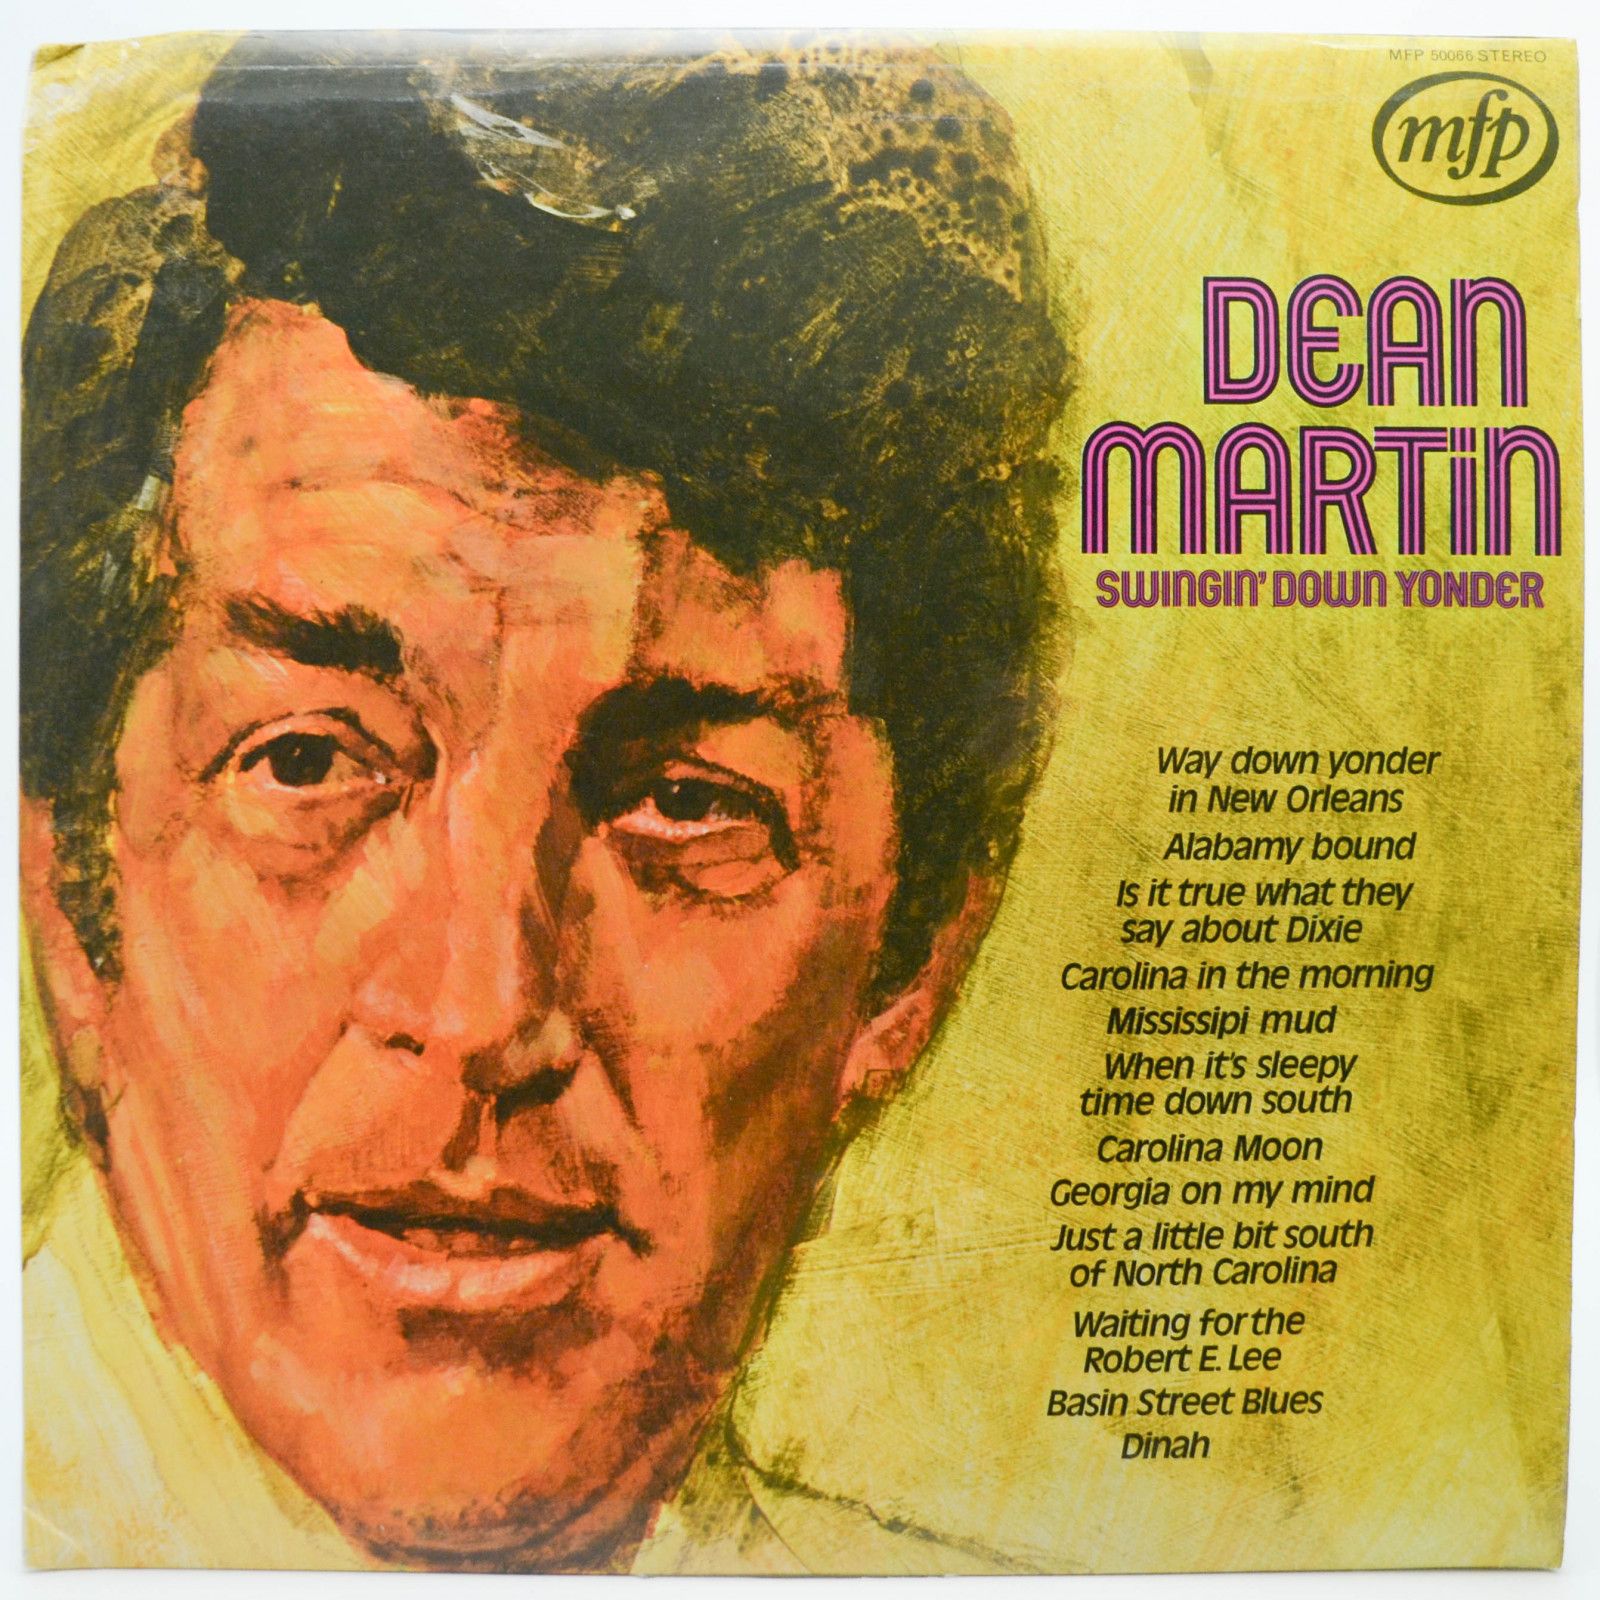 Dean Martin — Swingin' Down Yonder, 1955